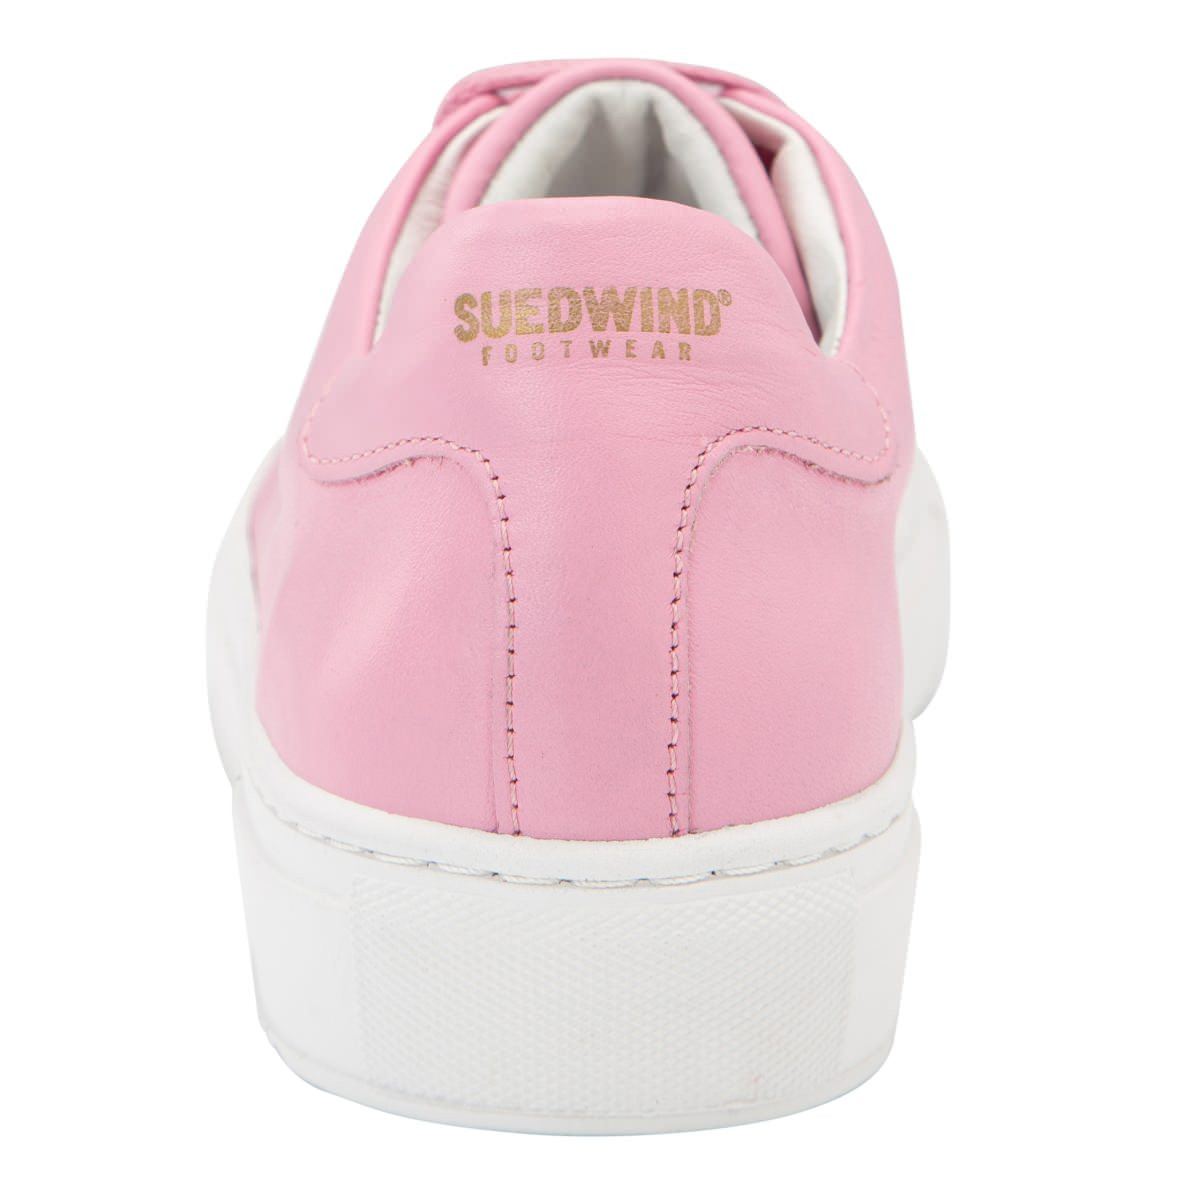 Suedwind-Ashton-Leather-Leder-Sneaker-Schuhe-Boots-Pink-10170027-04_1280x1280